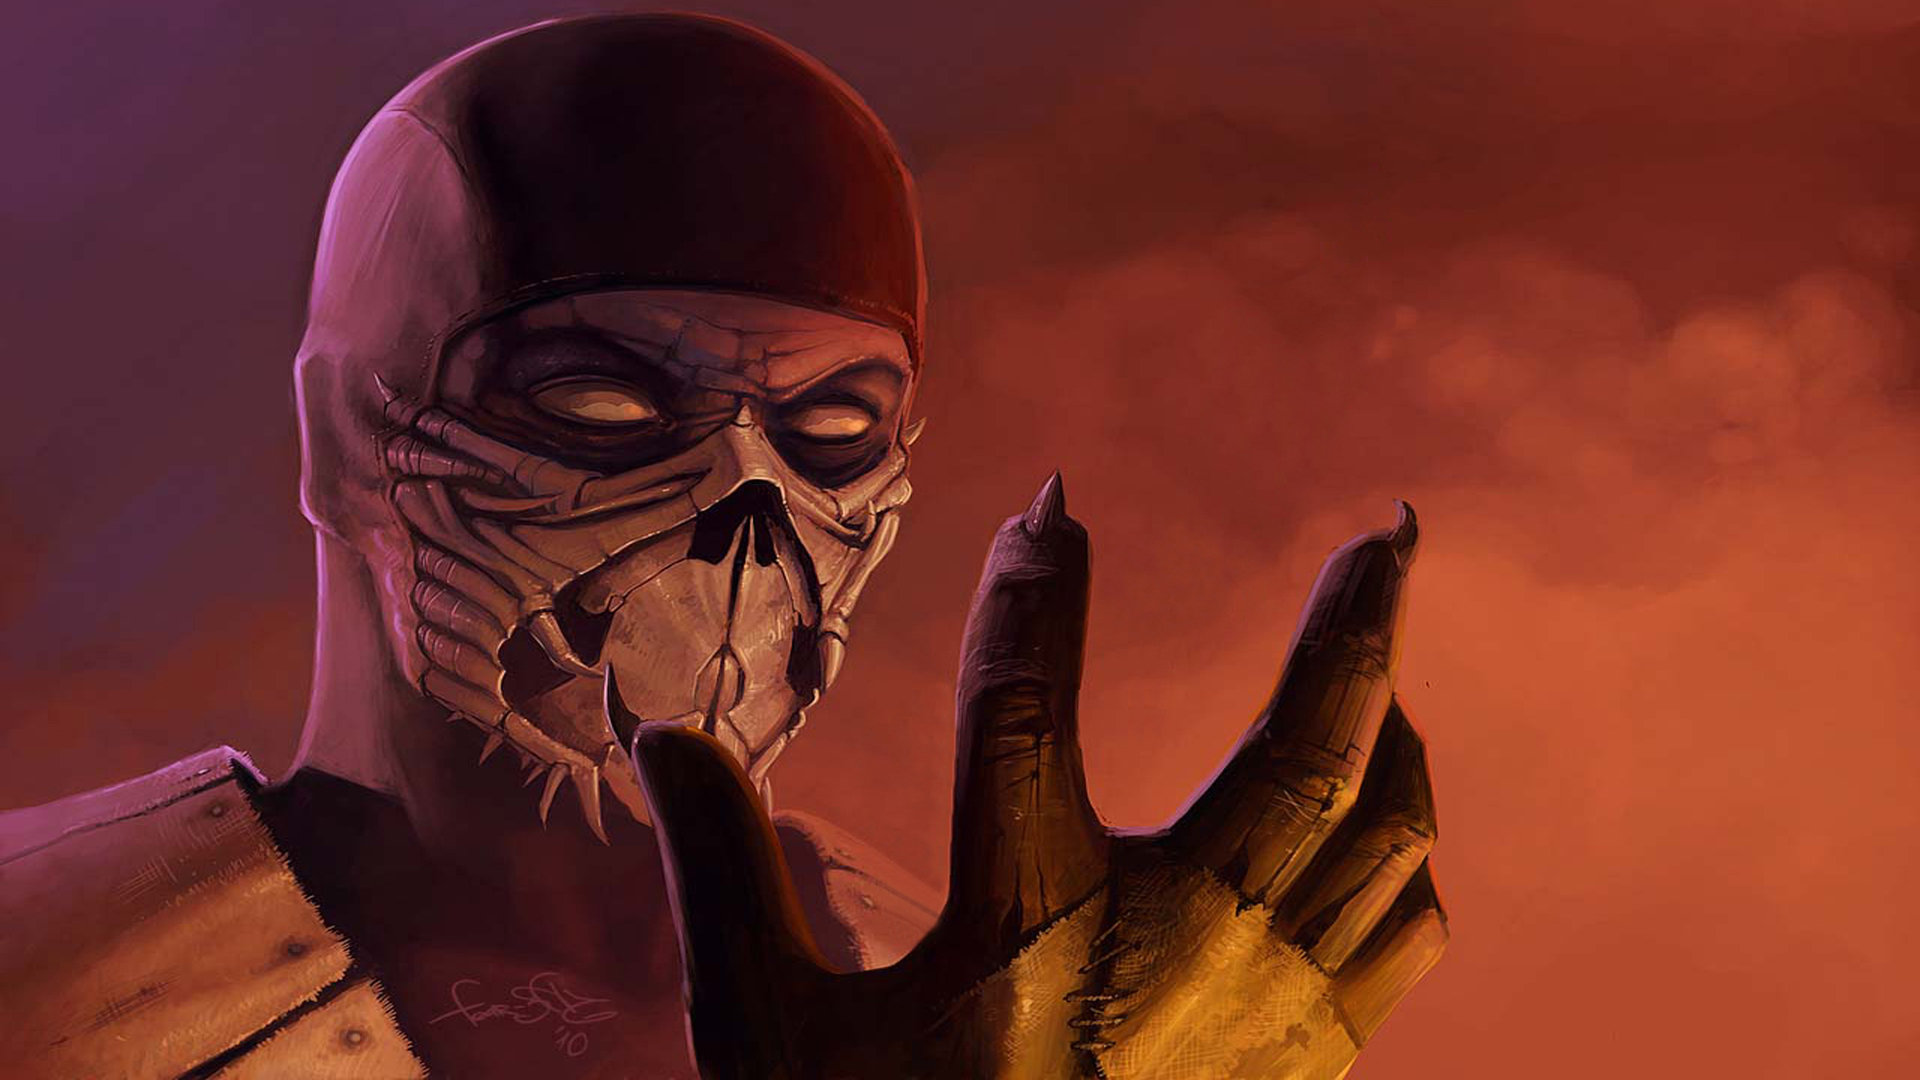 Mortal Kombat Hd Wallpaper Background Image 1920x1080 5373